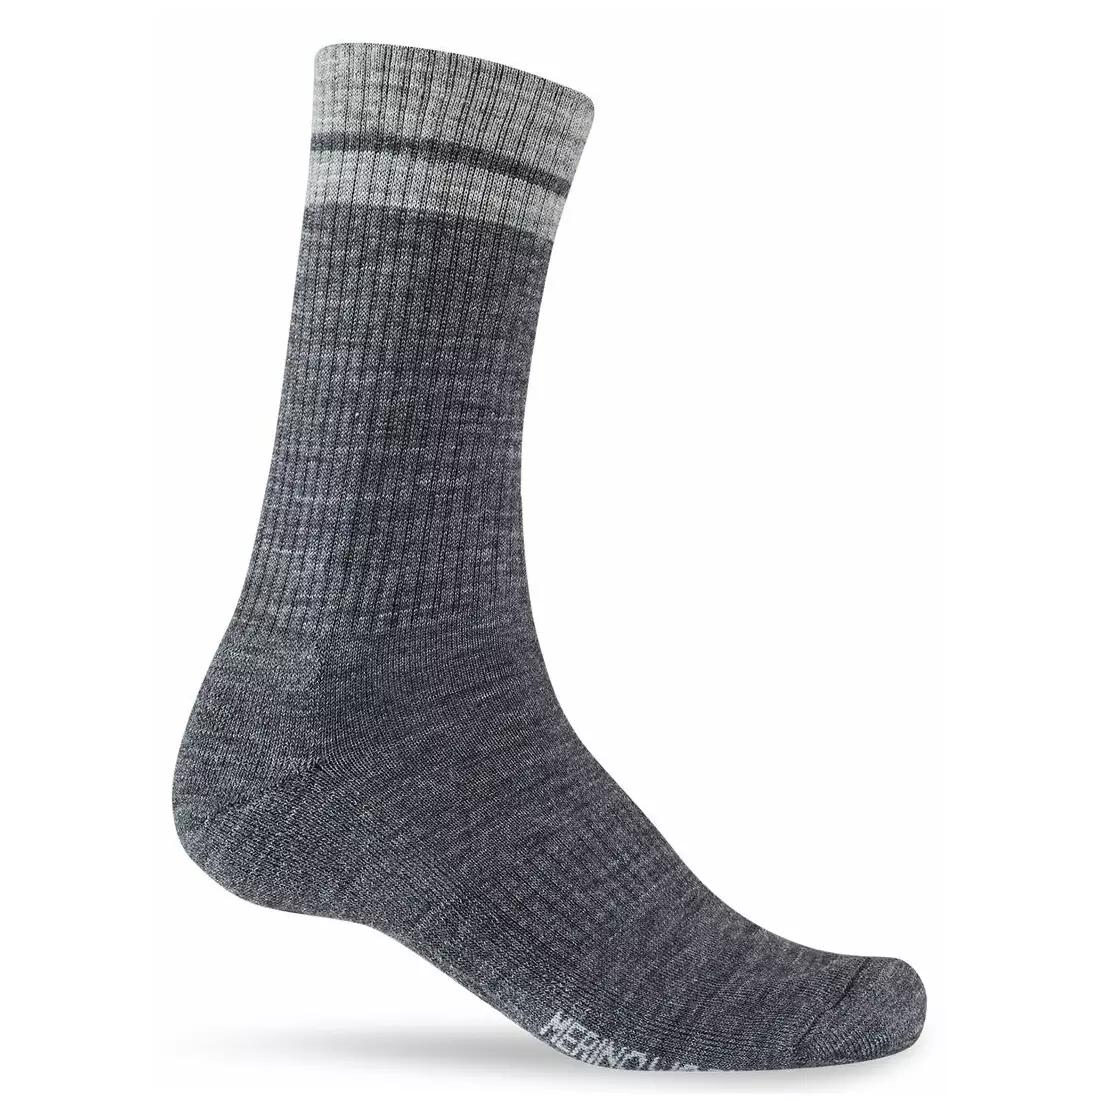 GIRO cycling socks winter merino wool charcoal grey GR-7062588